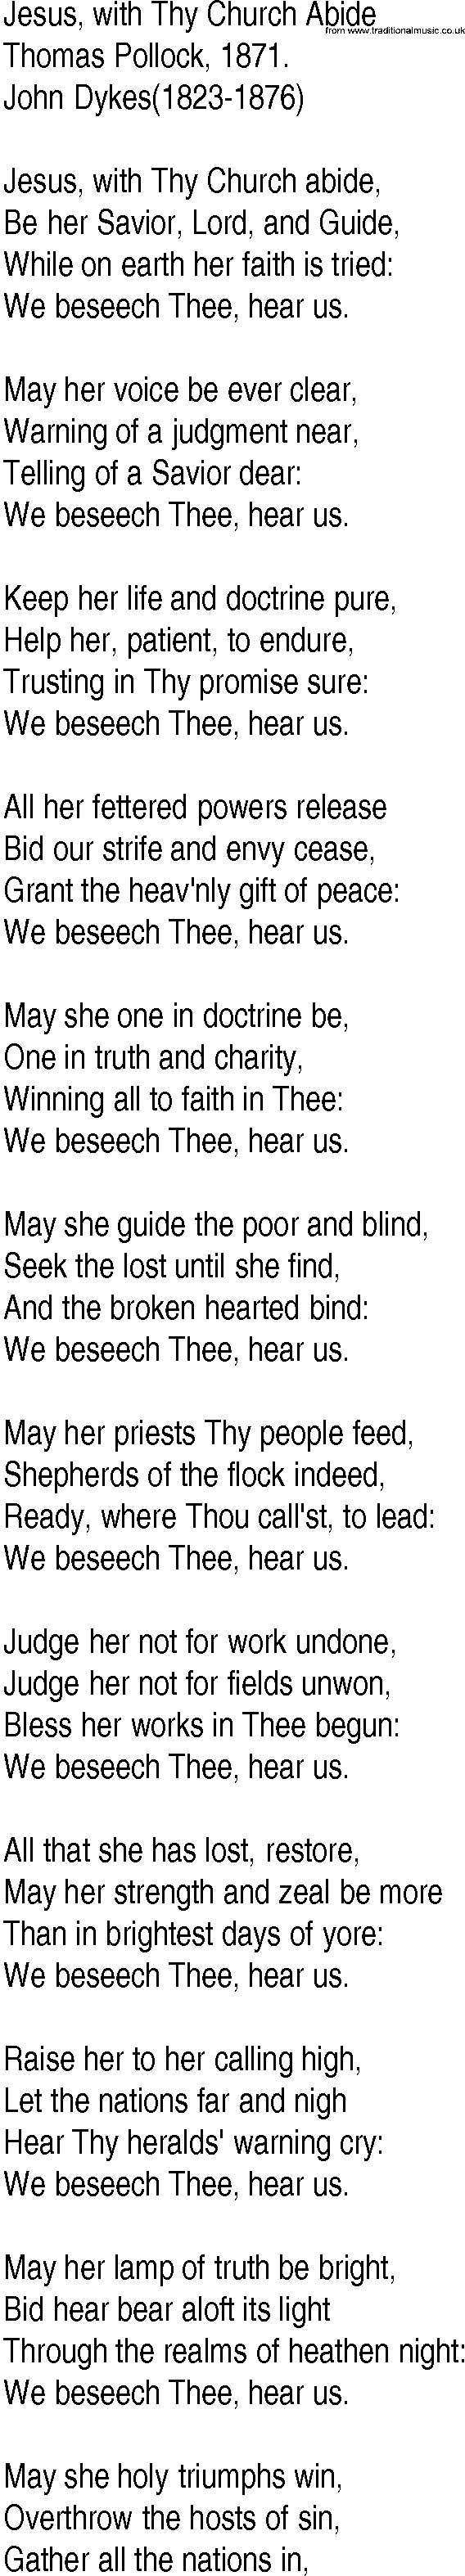 Hymn and Gospel Song: Jesus, with Thy Church Abide by Thomas Pollock lyrics